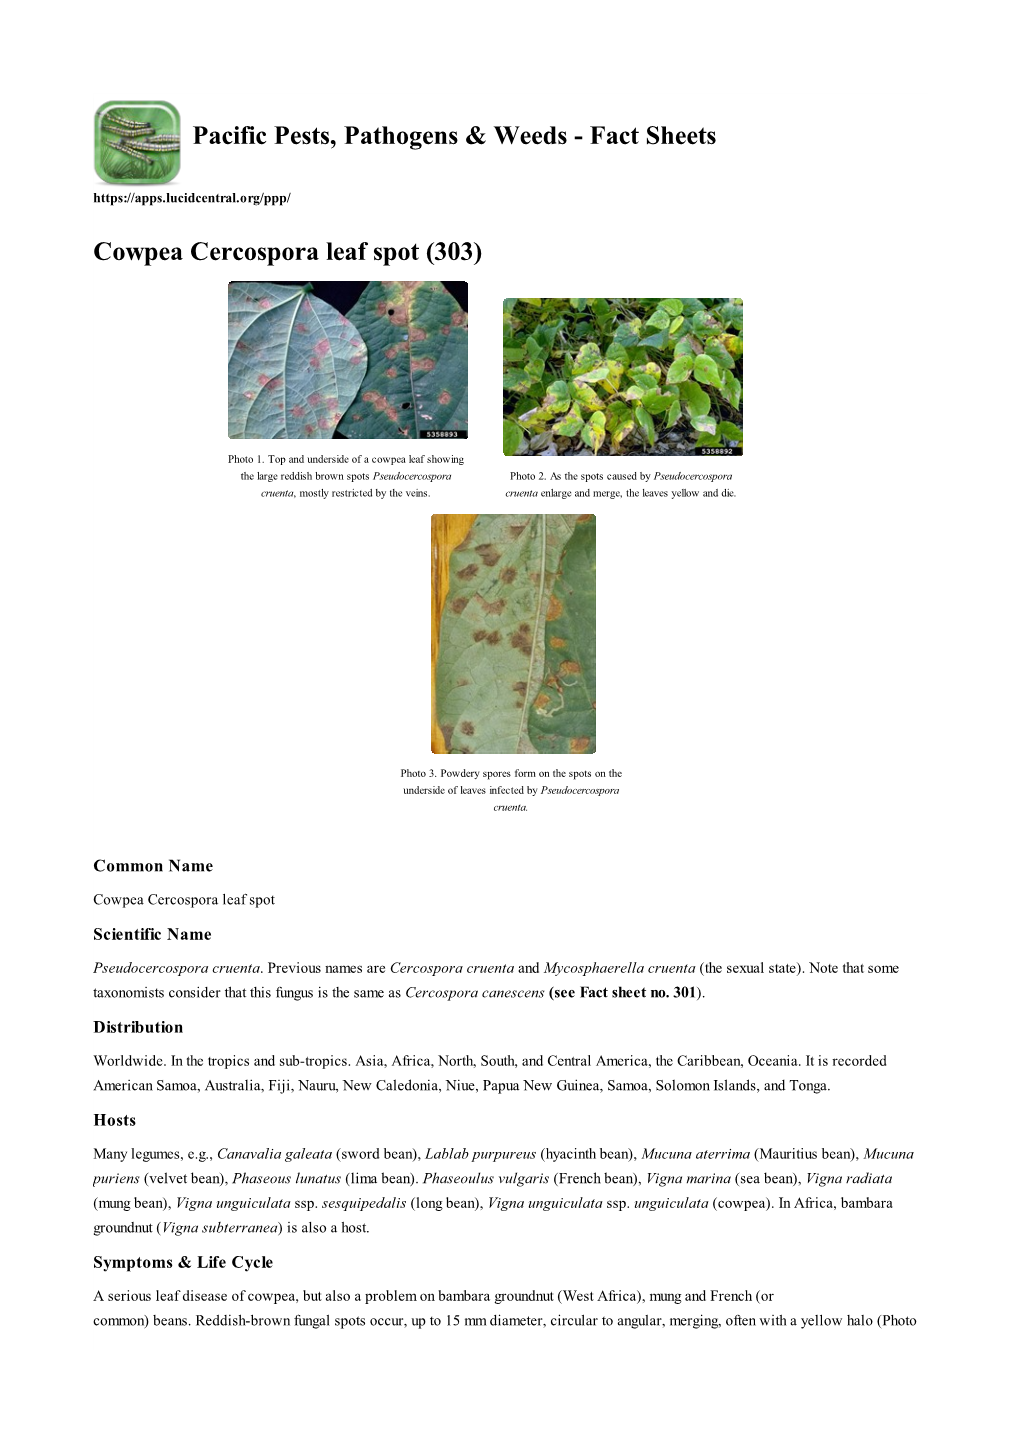 Cowpea Cercospora Leaf Spot (303)